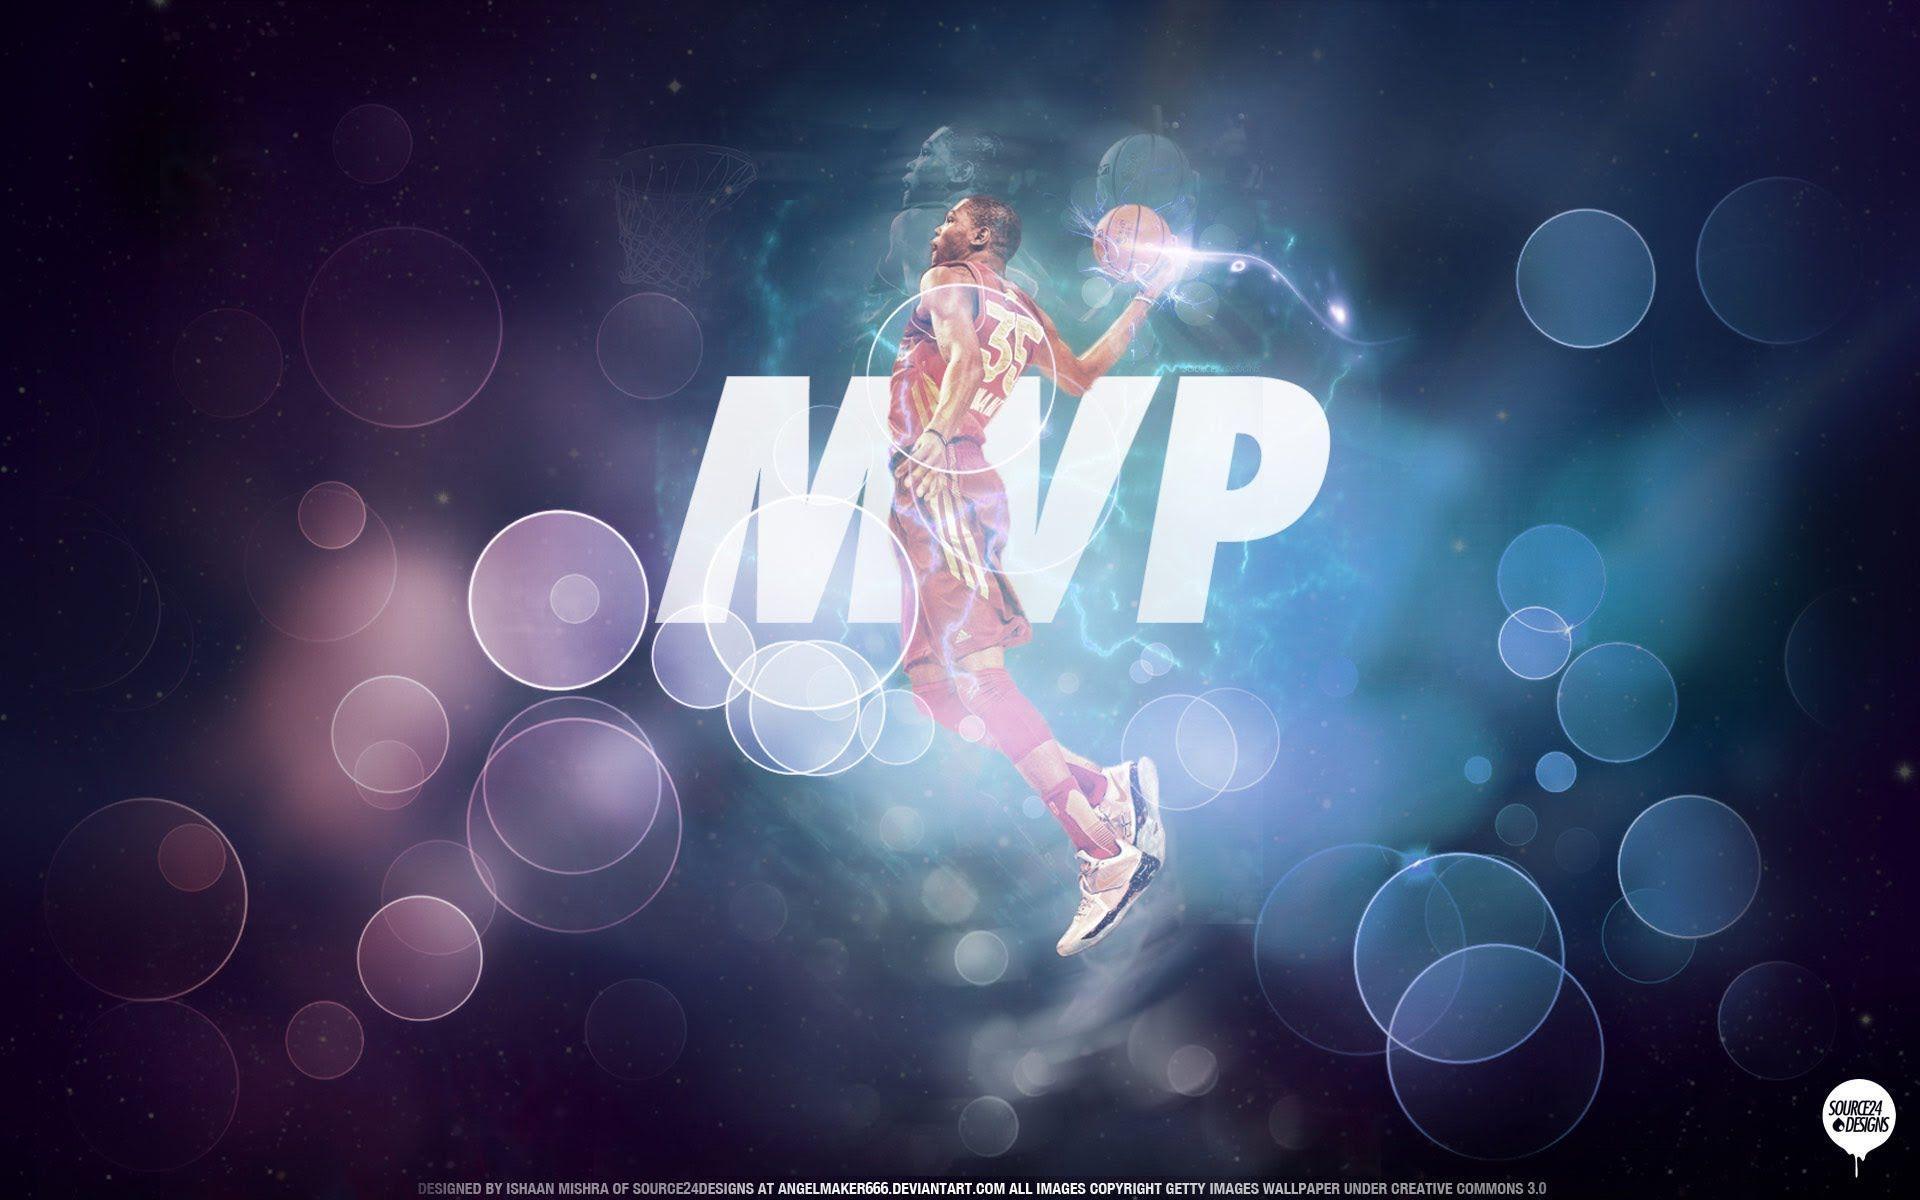 Kevin Durant 2014 MVP Season Mix ᴴᴰ 2016 09 21